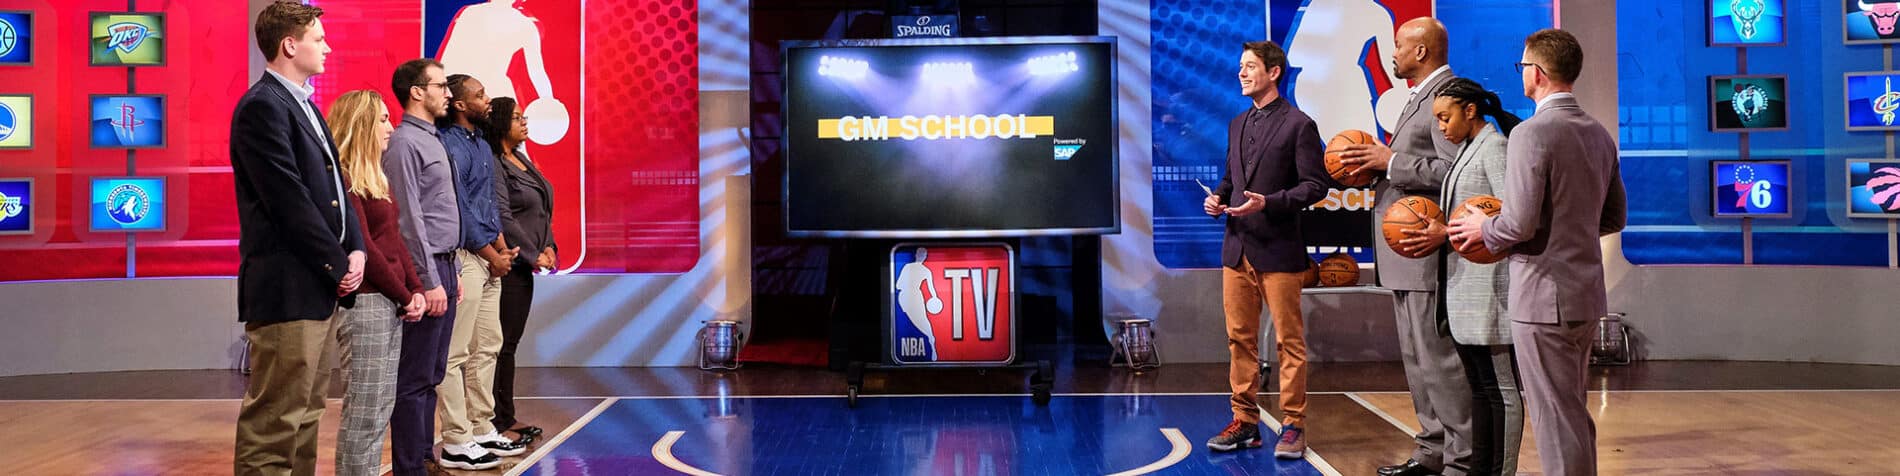 SAP Re-Enrolls in Sophomore Season of NBA Reality TV Show GM School